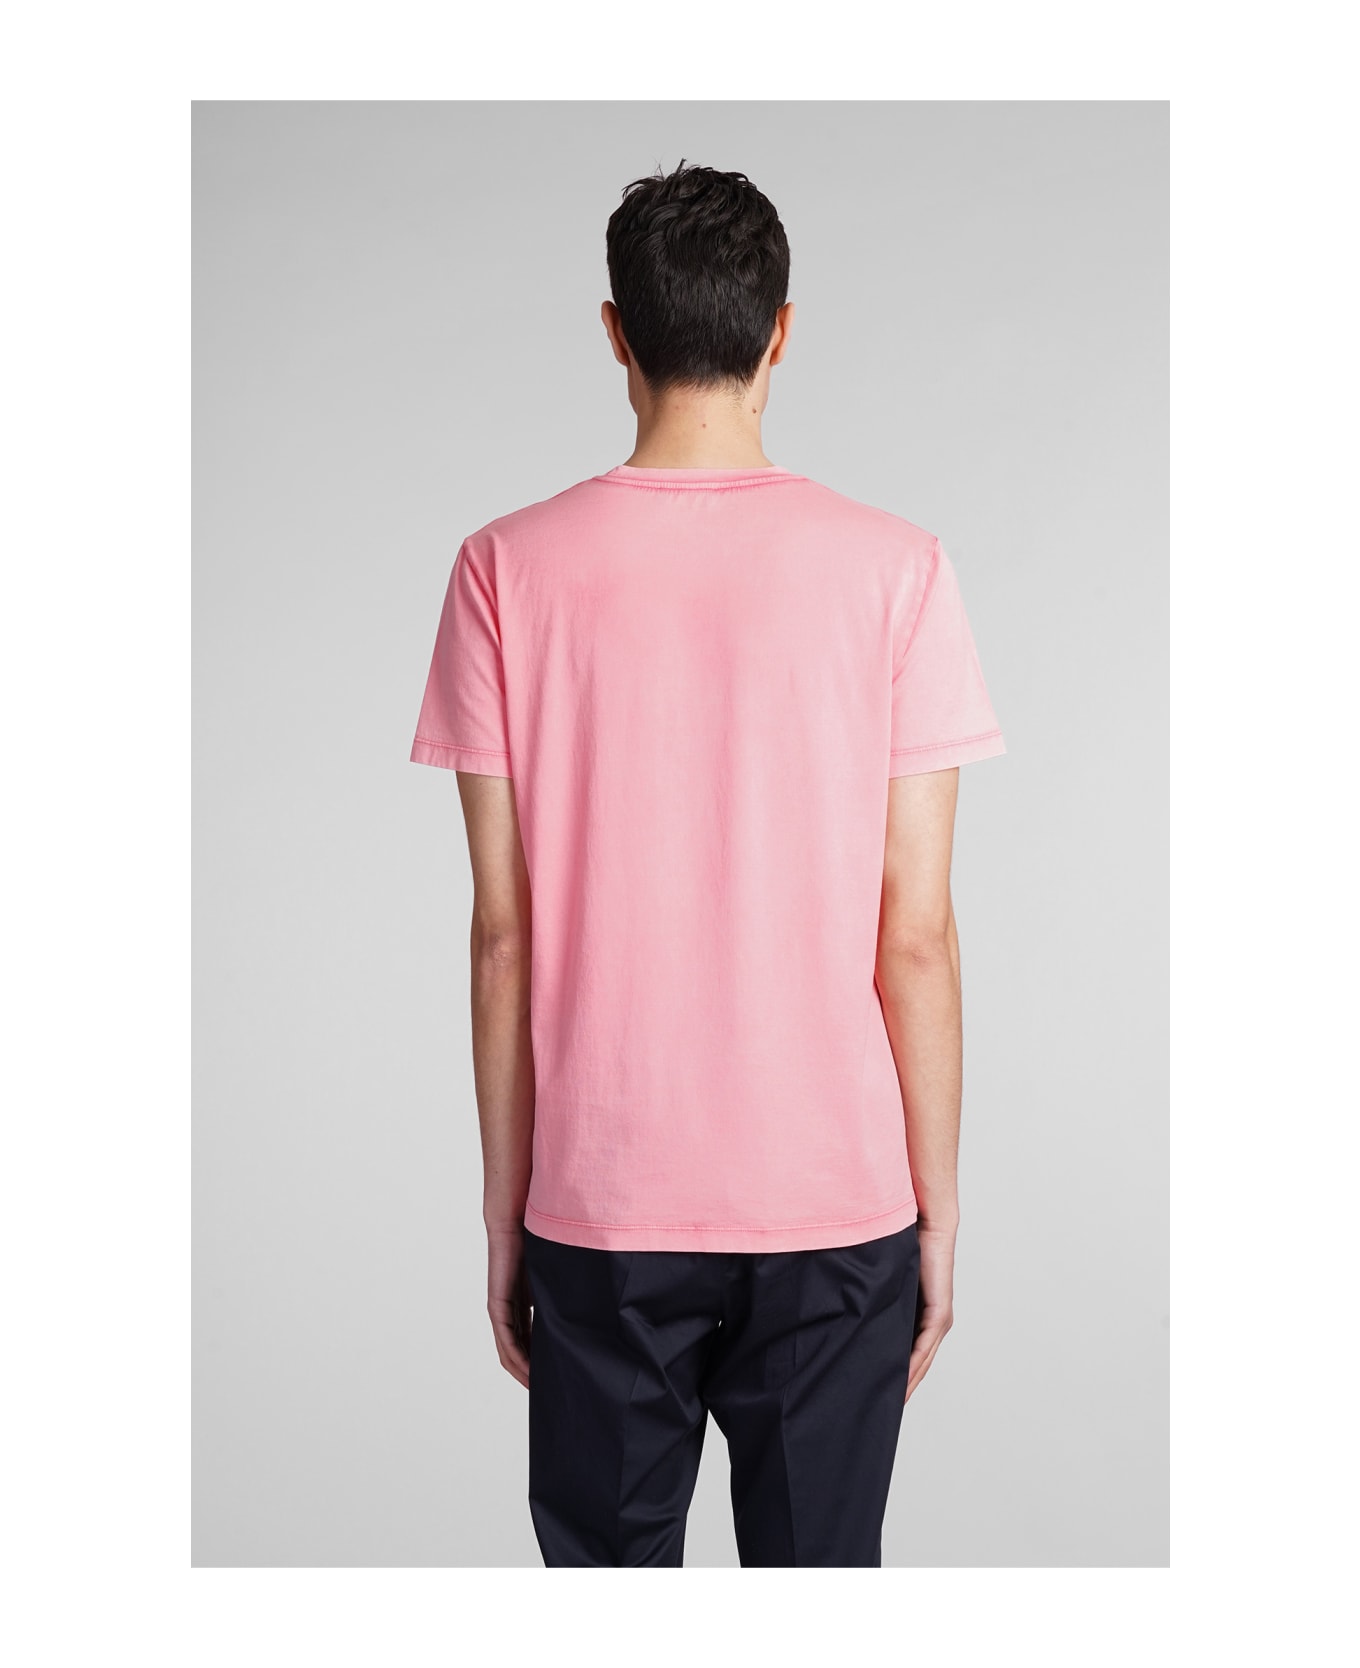 Roberto Collina T-shirt In Rose-pink Cotton - rose-pink シャツ